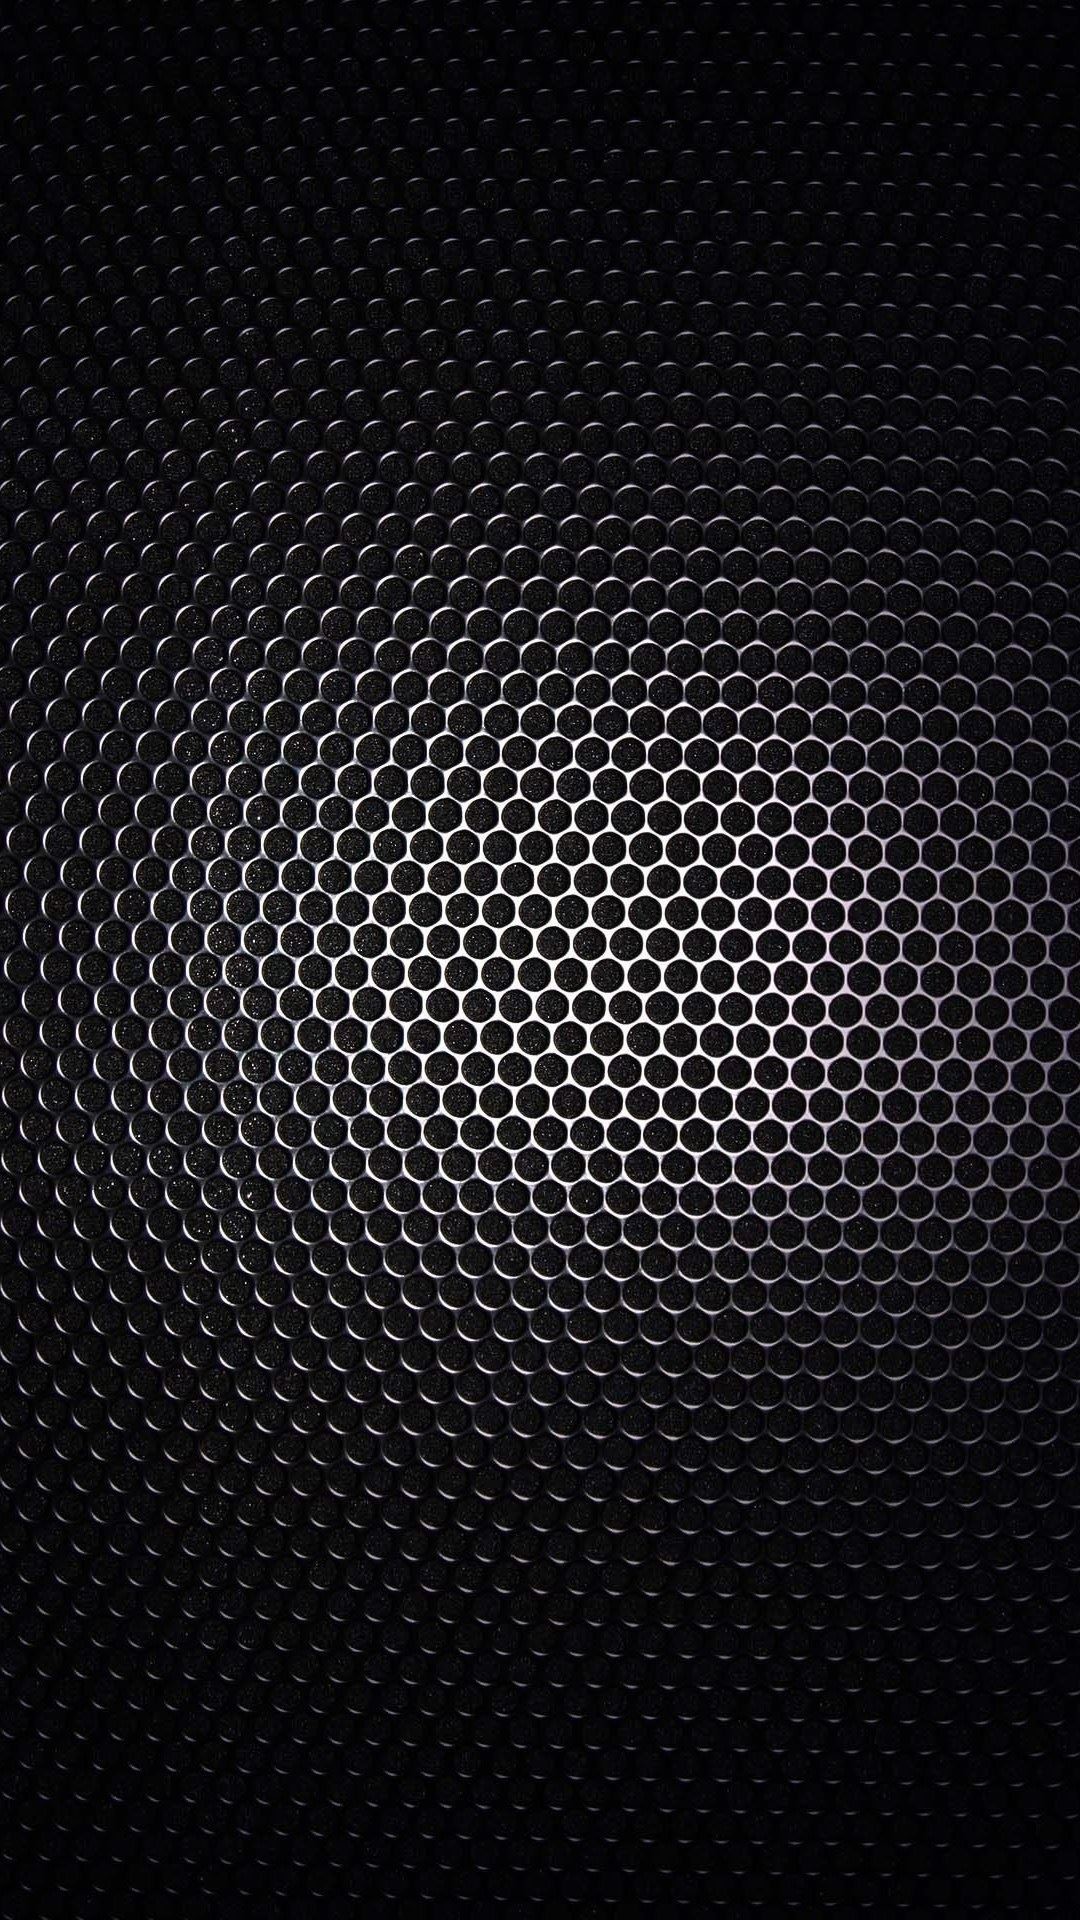 1080x1920 Dark Metal Hexagons Grid Pattern iPhone 6 Plus HD Wallpaper ...